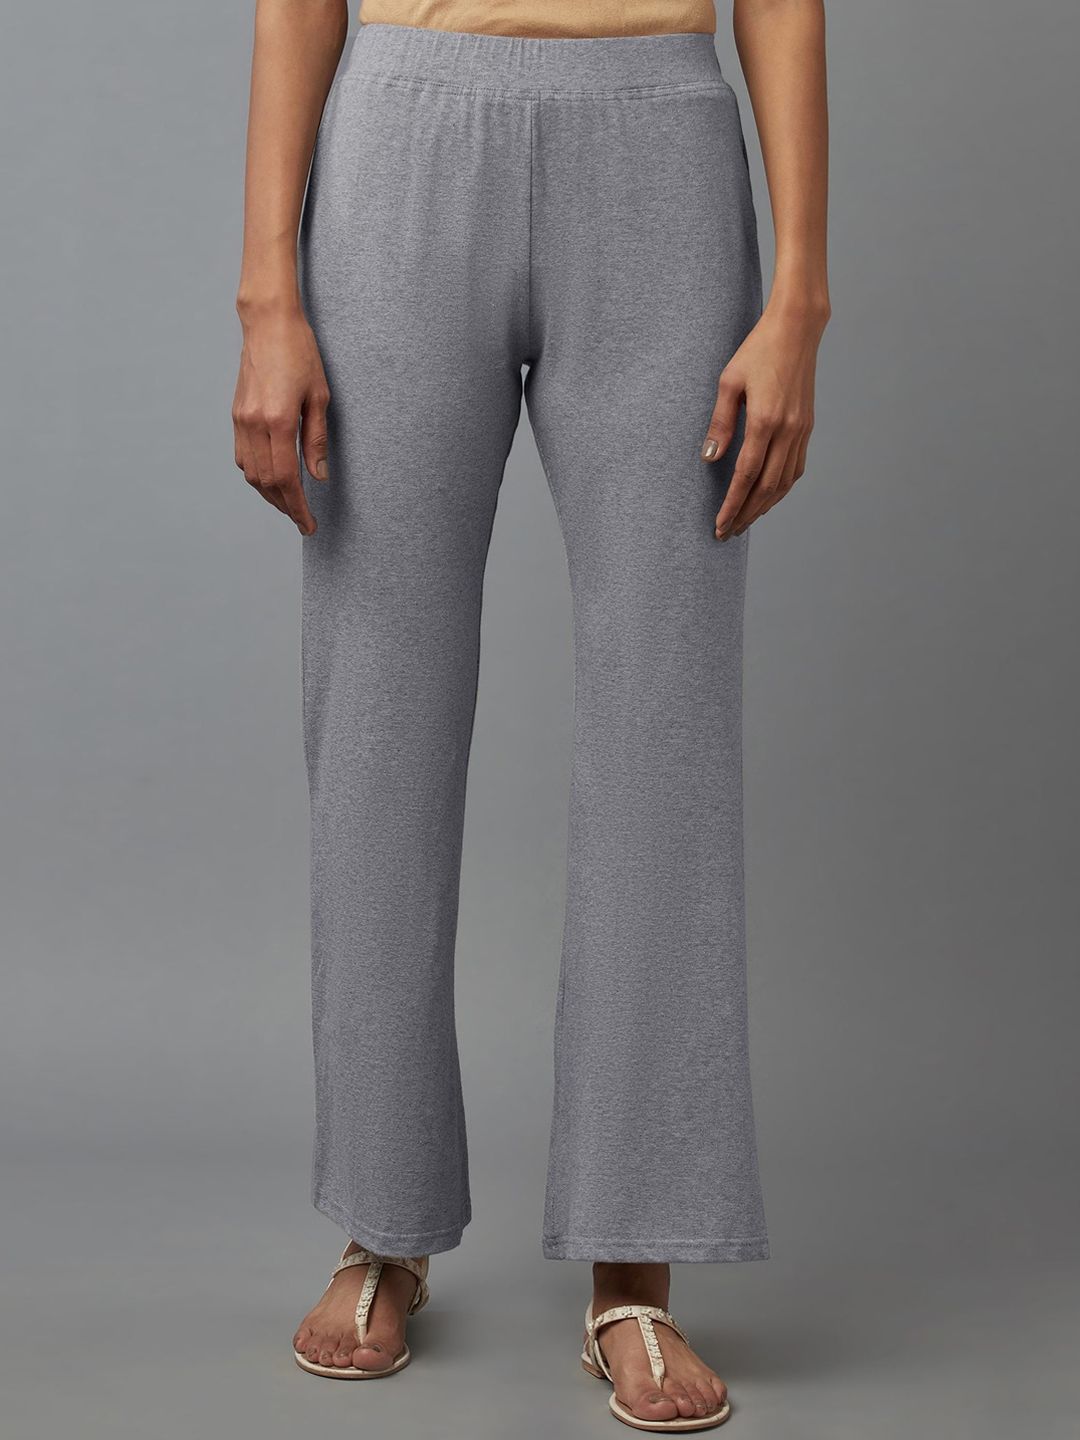 elleven Women Grey Original Pleated Trousers Price in India